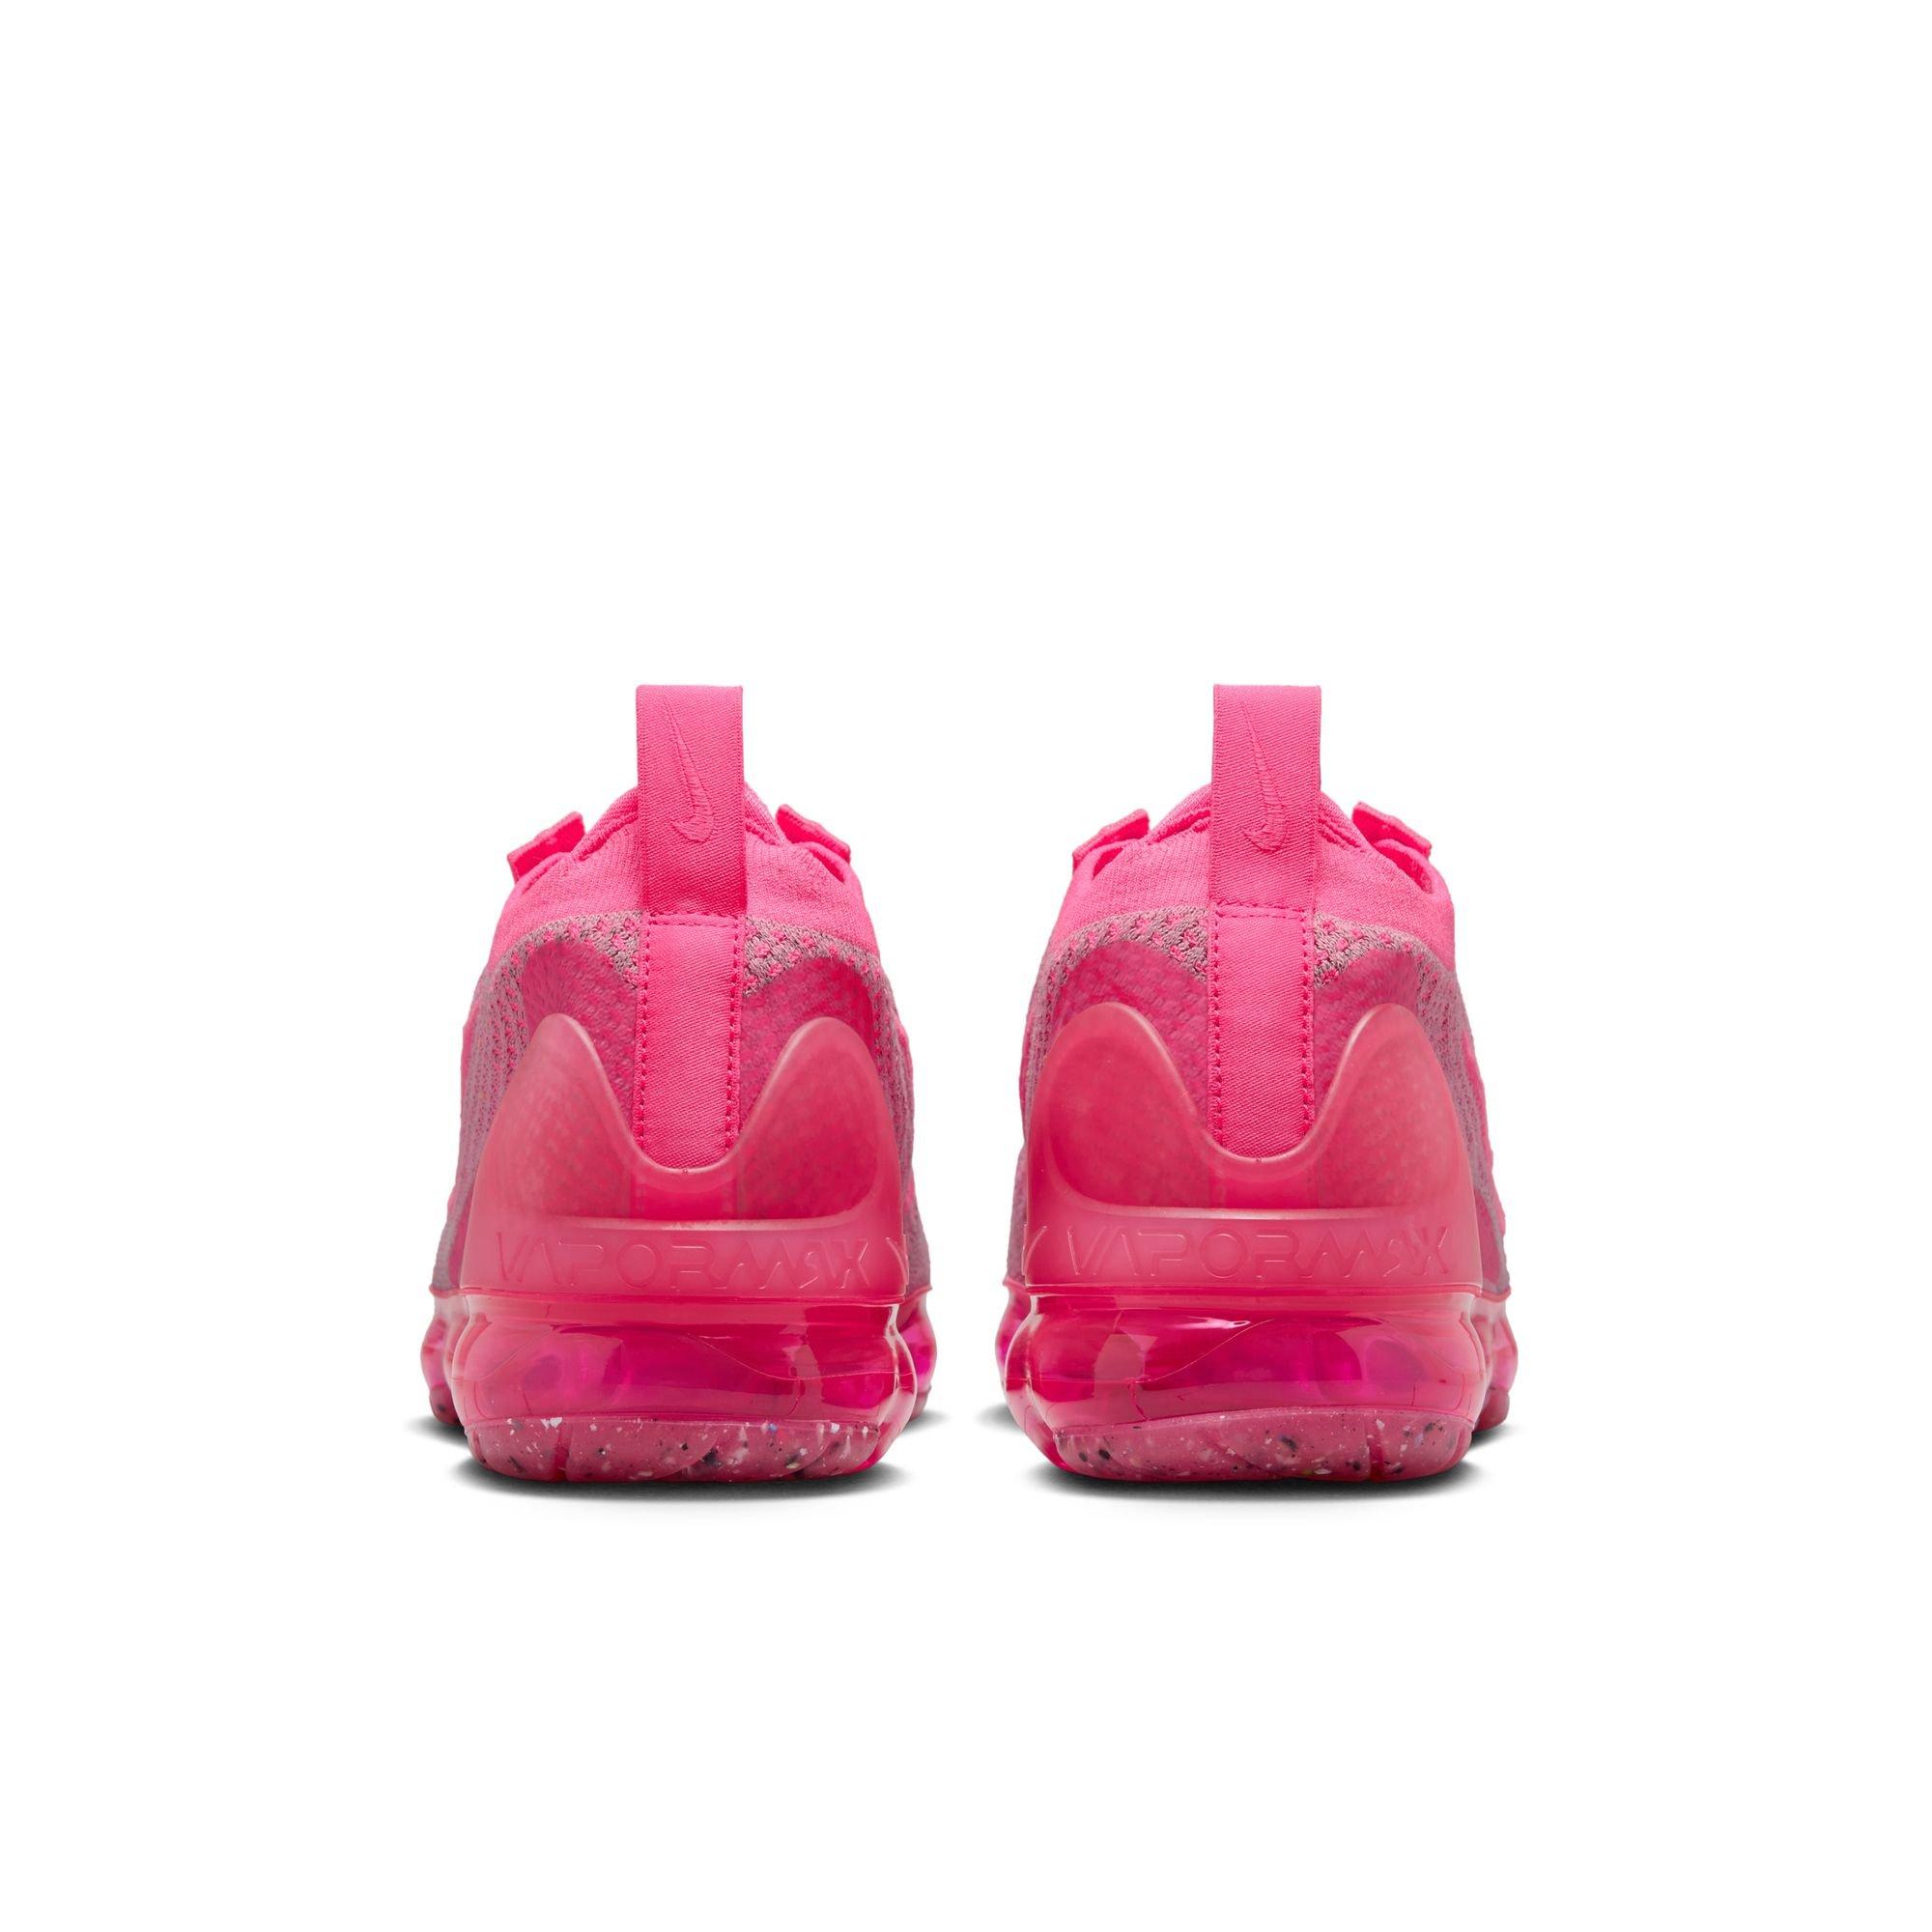 Nike Vapormax Pink 